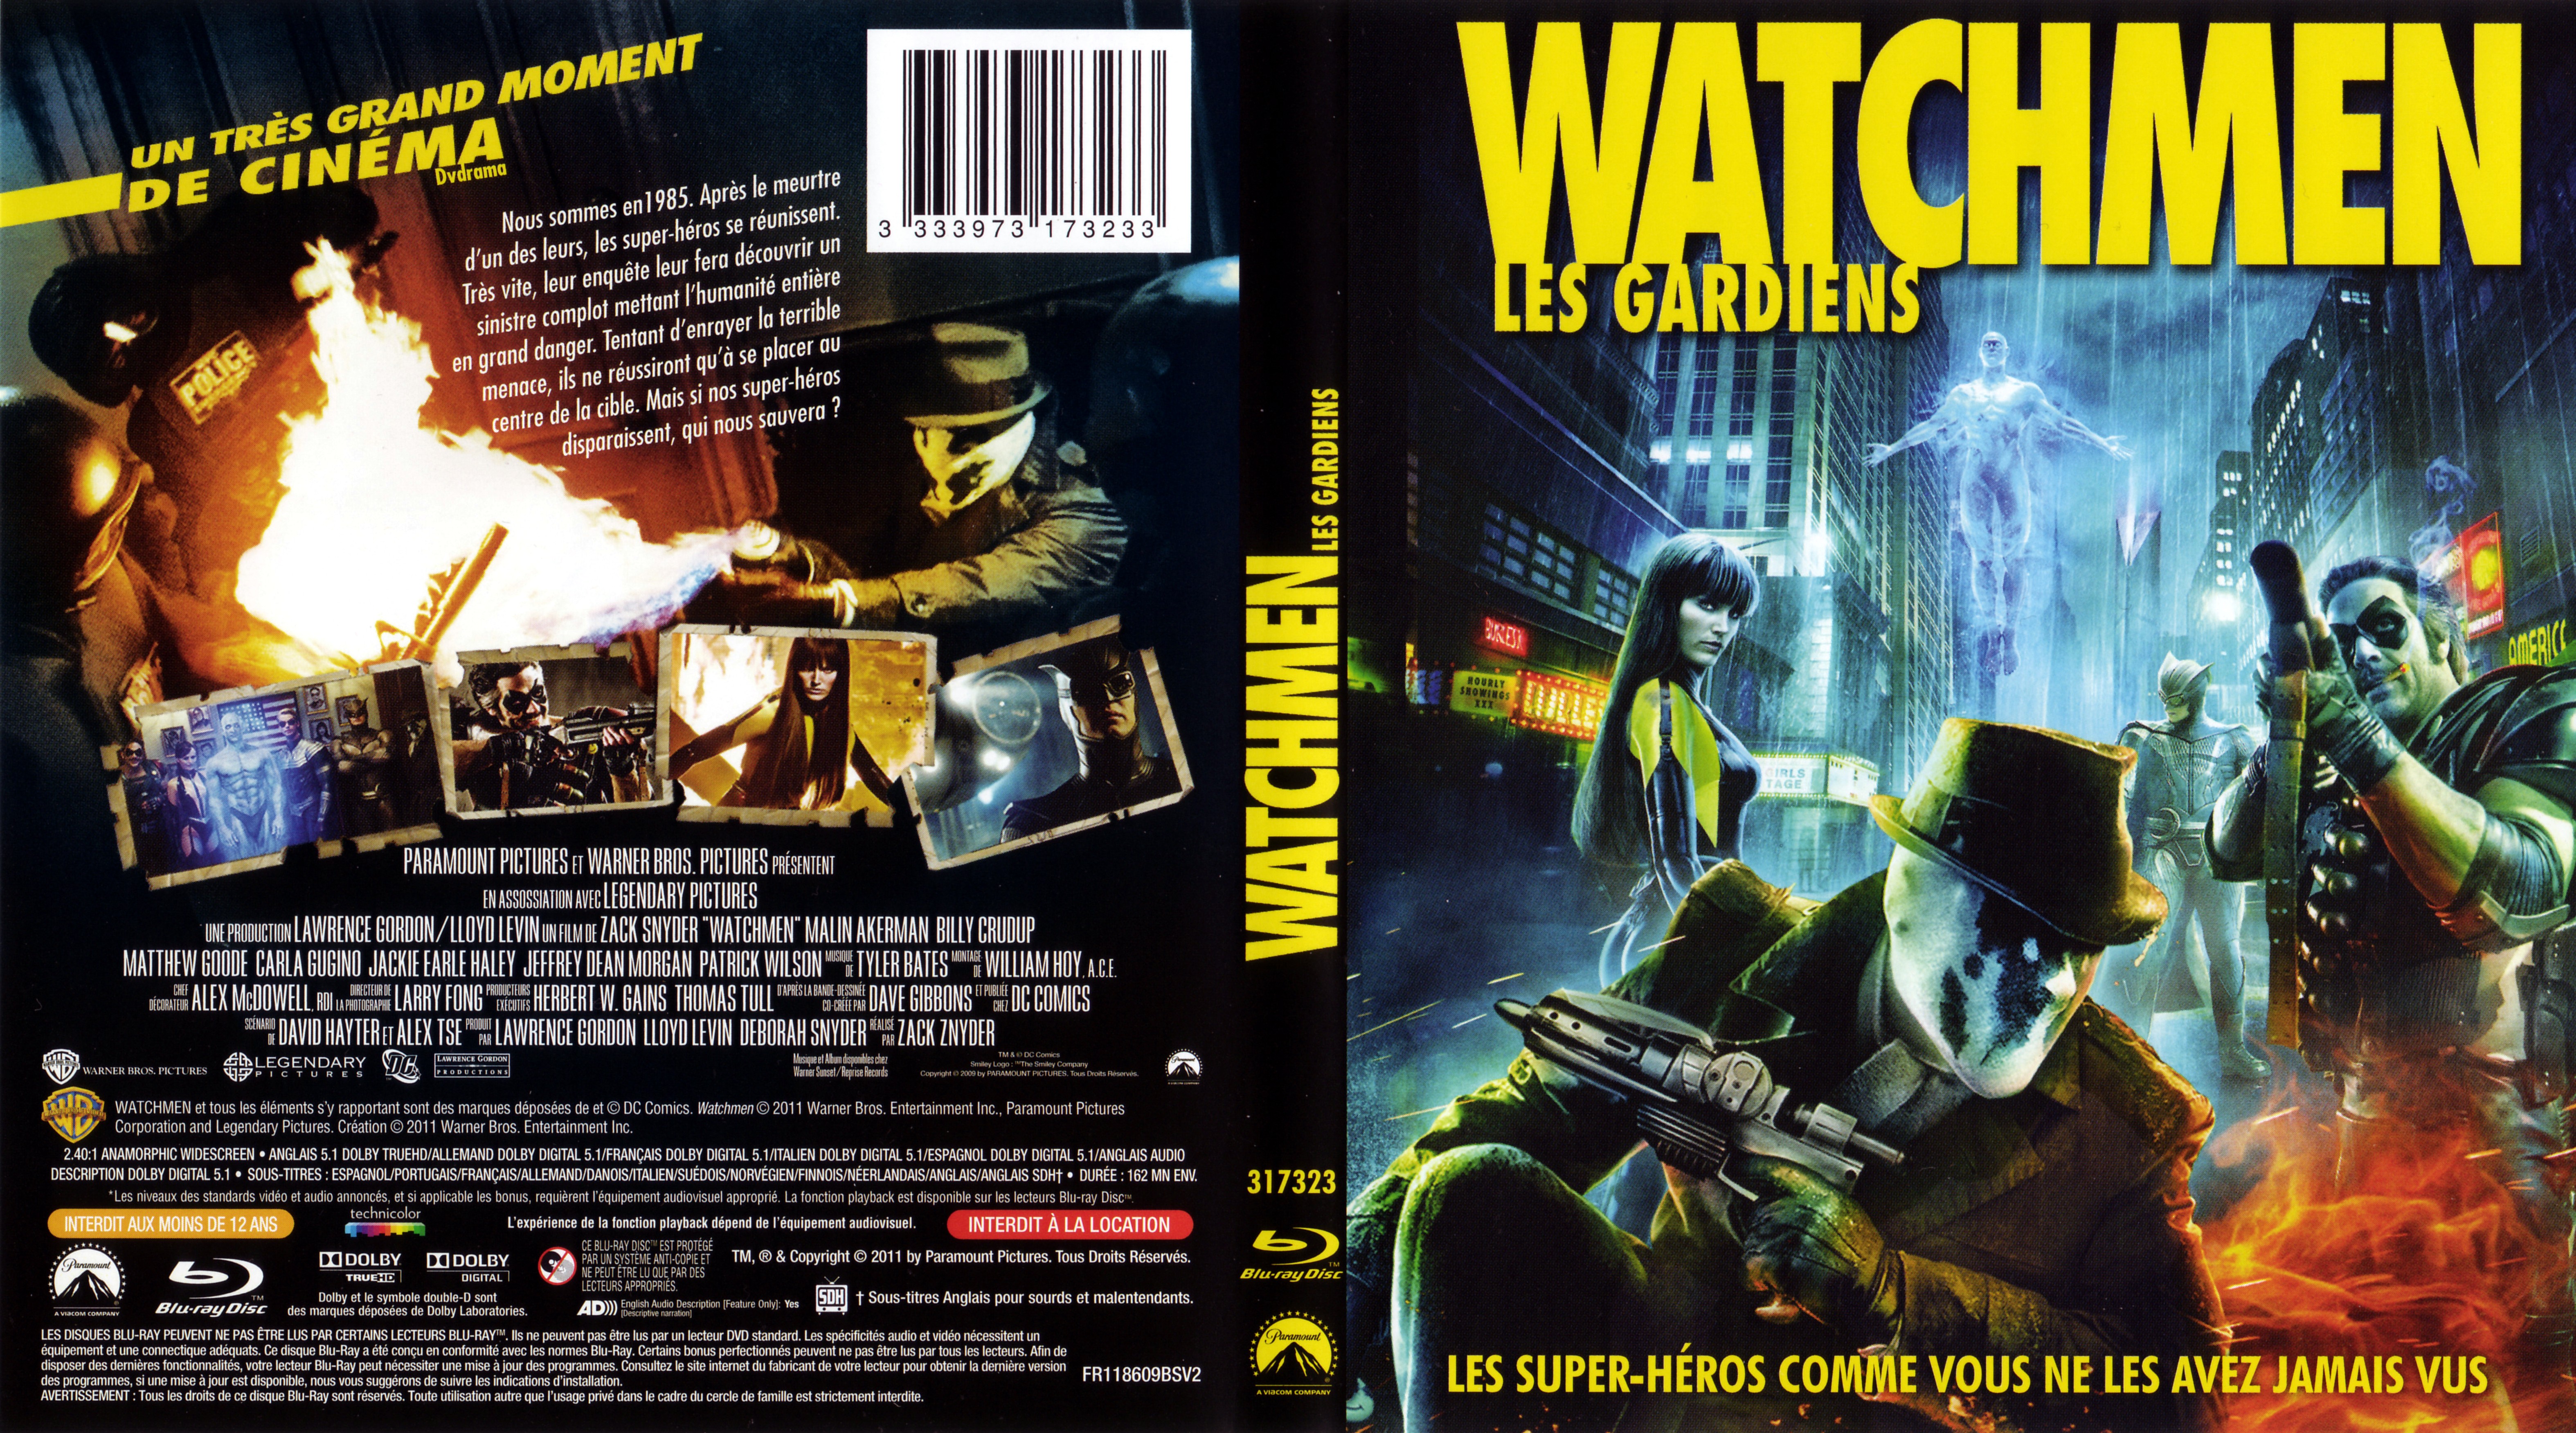 Jaquette DVD Watchmen Les gerdiens (BLU-RAY) v2